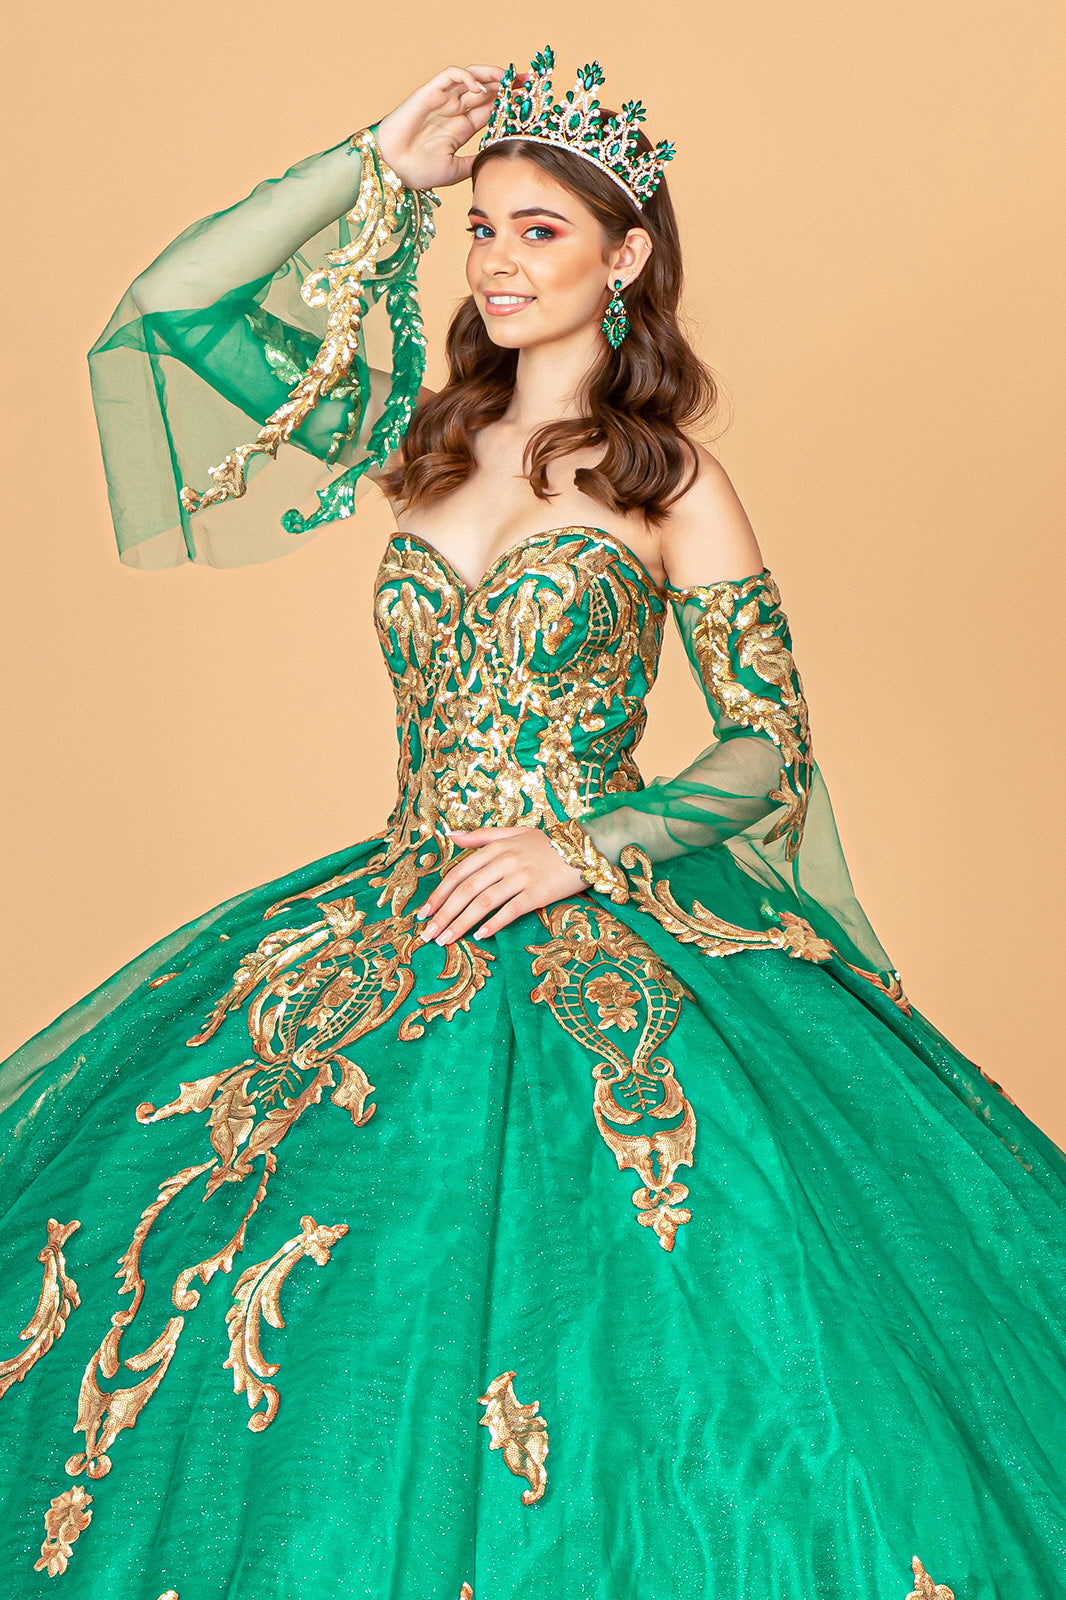 Long Strapless Ball Gown Mesh Quinceanera Dress - The Dress Outlet Emerald Green